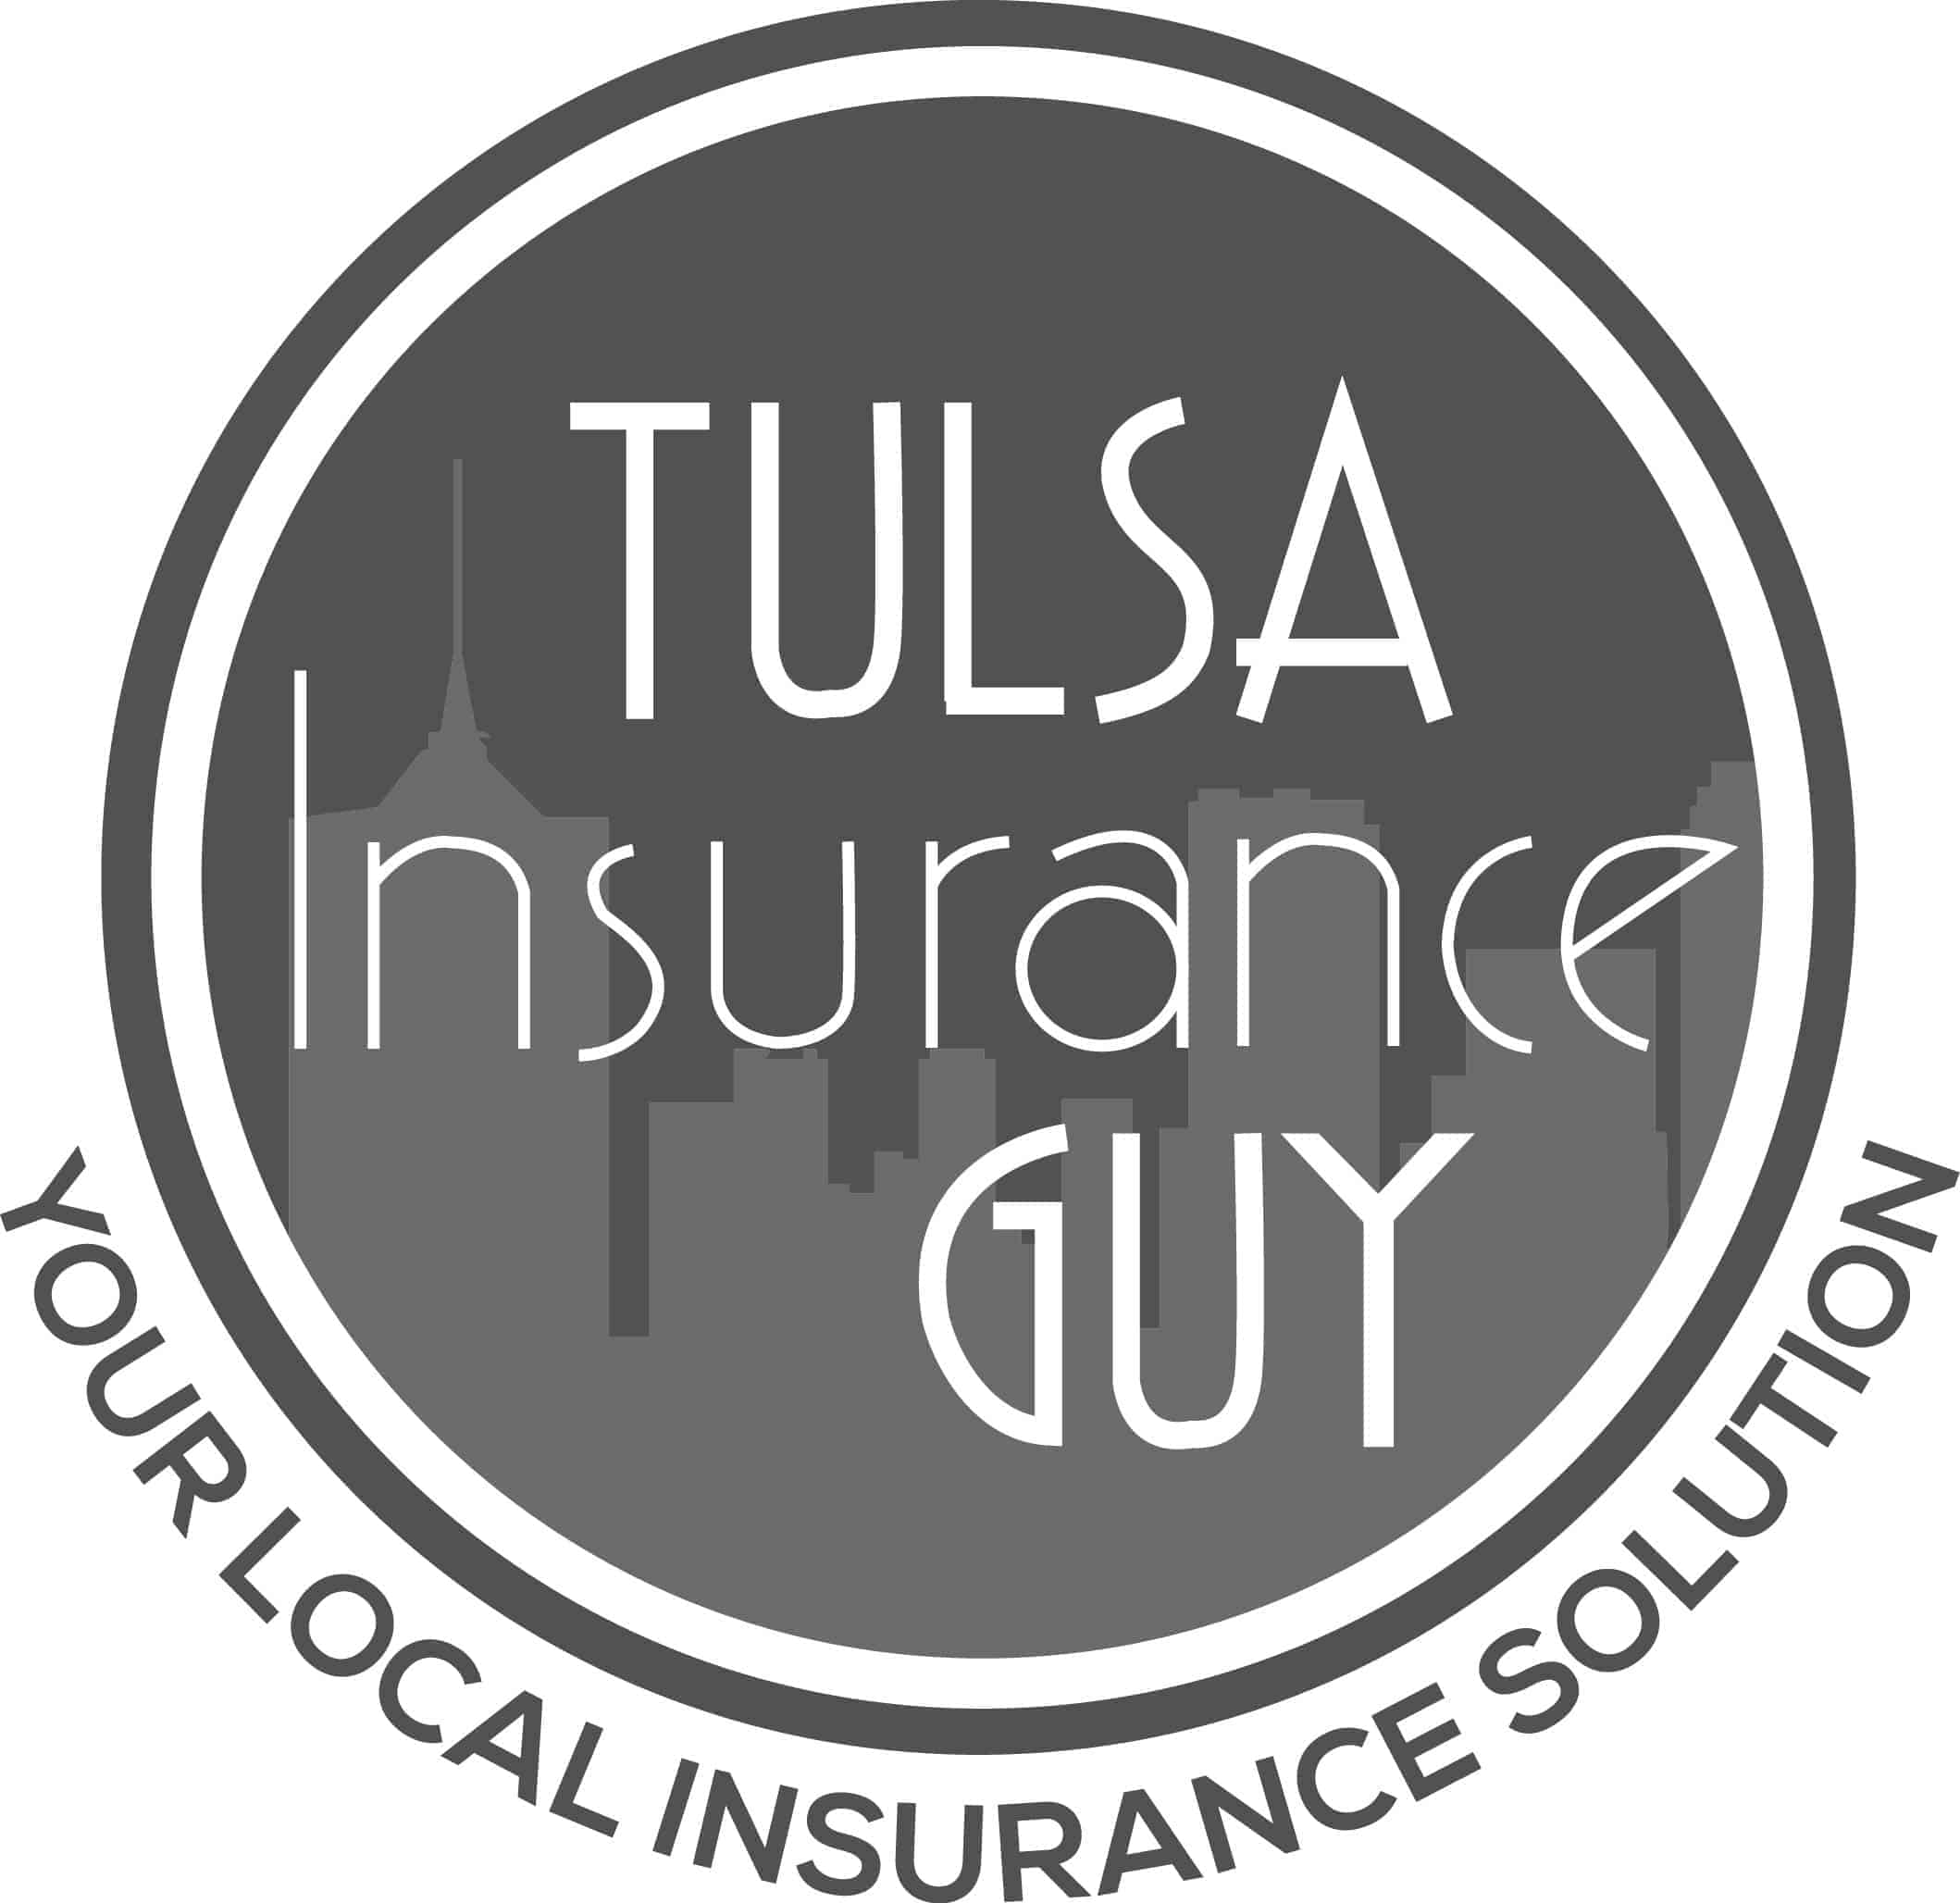 Tulsa Insurance Guy Home Auto Business Life Broker